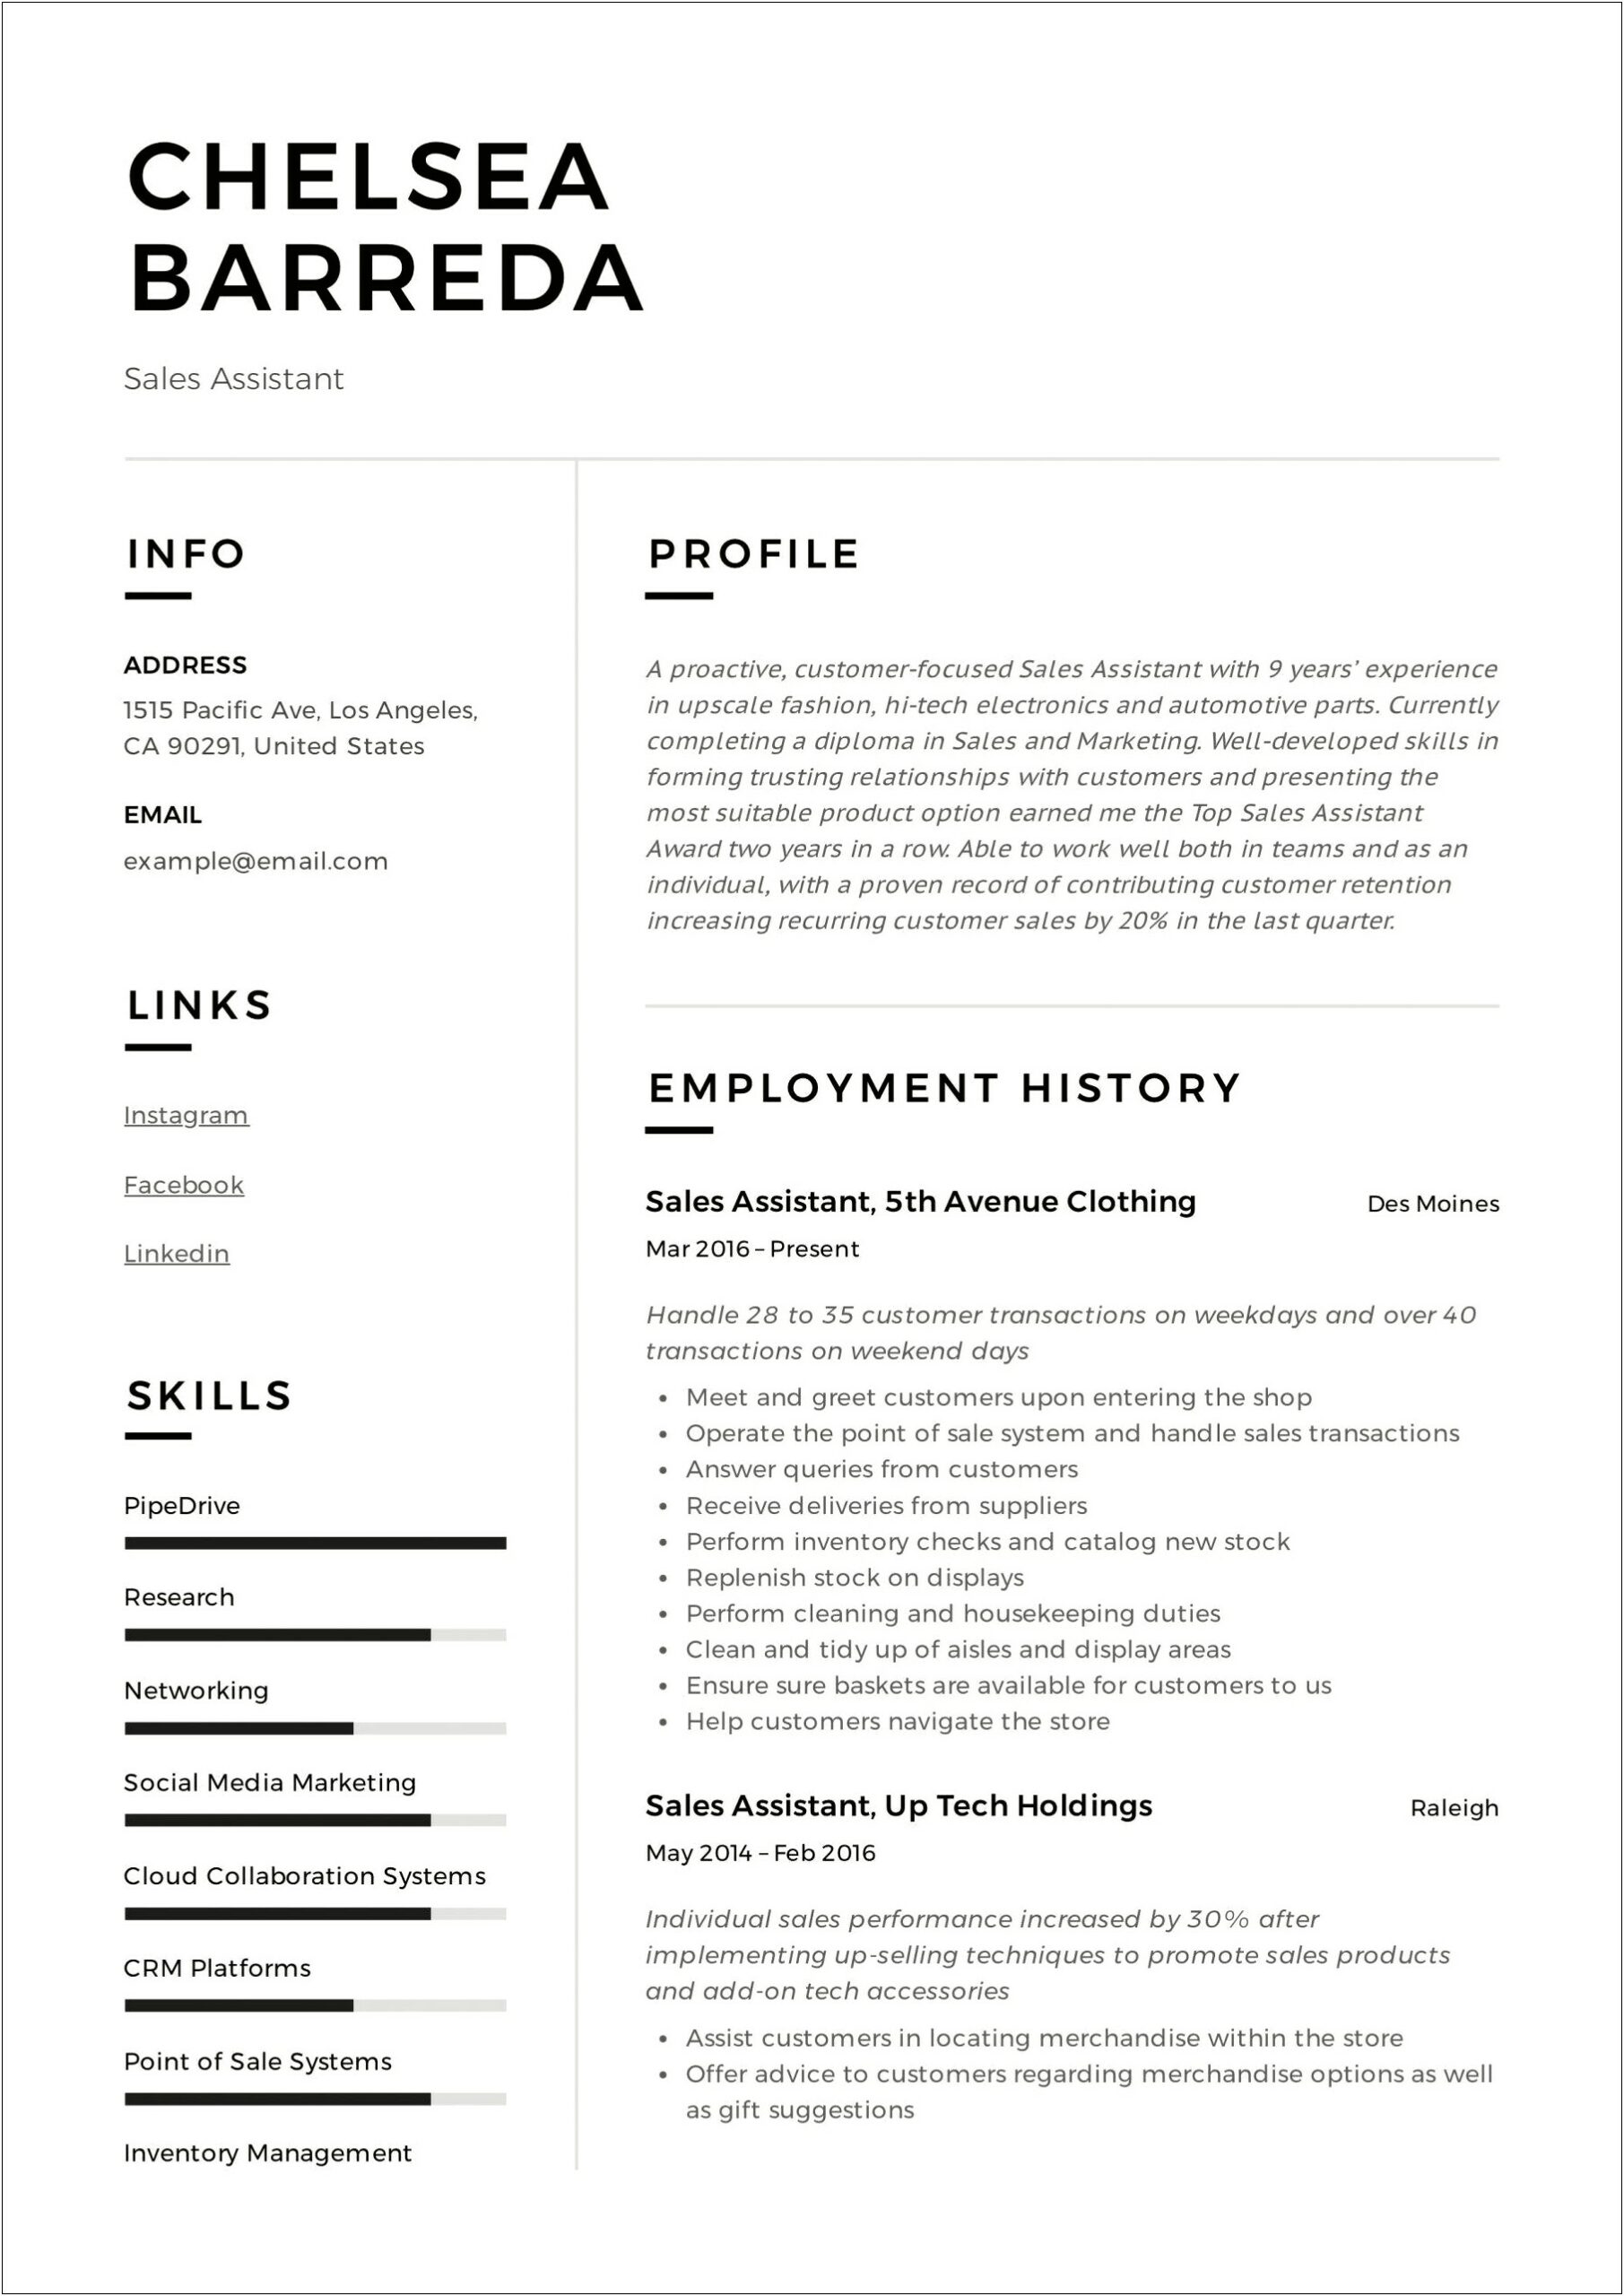 Sales Advisor Job Description For Resume